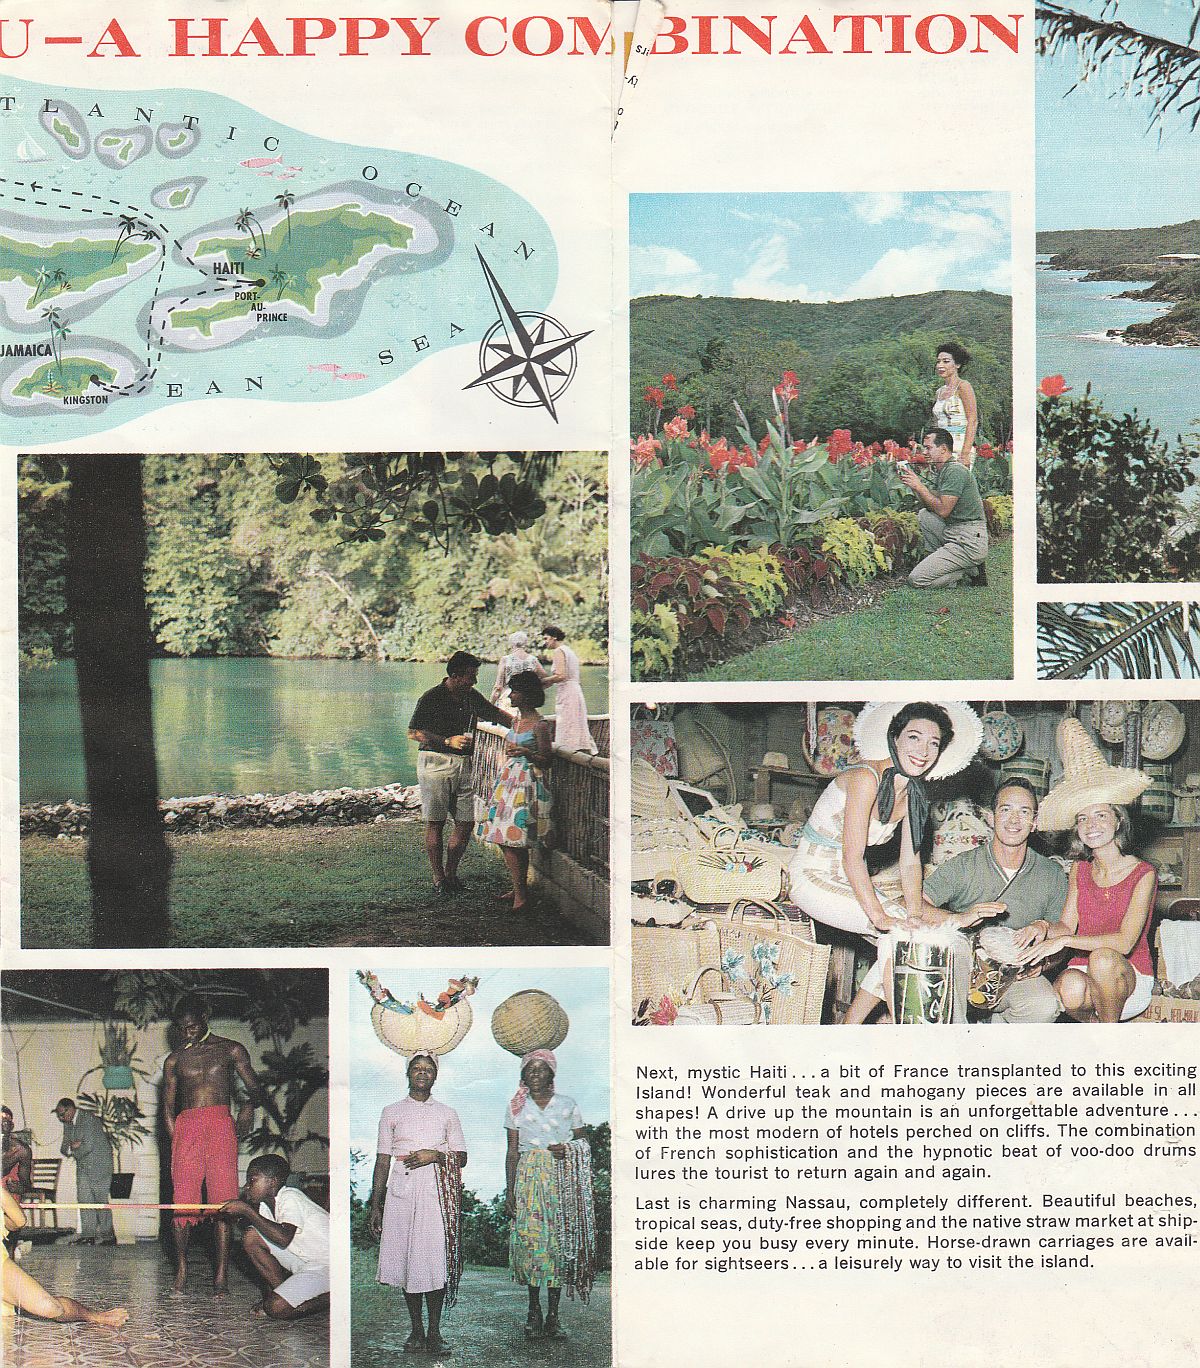 ss Evangeline Itinerary map & Haiti & Bahamas photos (cont'd): Jamaica, Haiti, Nassau - a happy combination (right page)